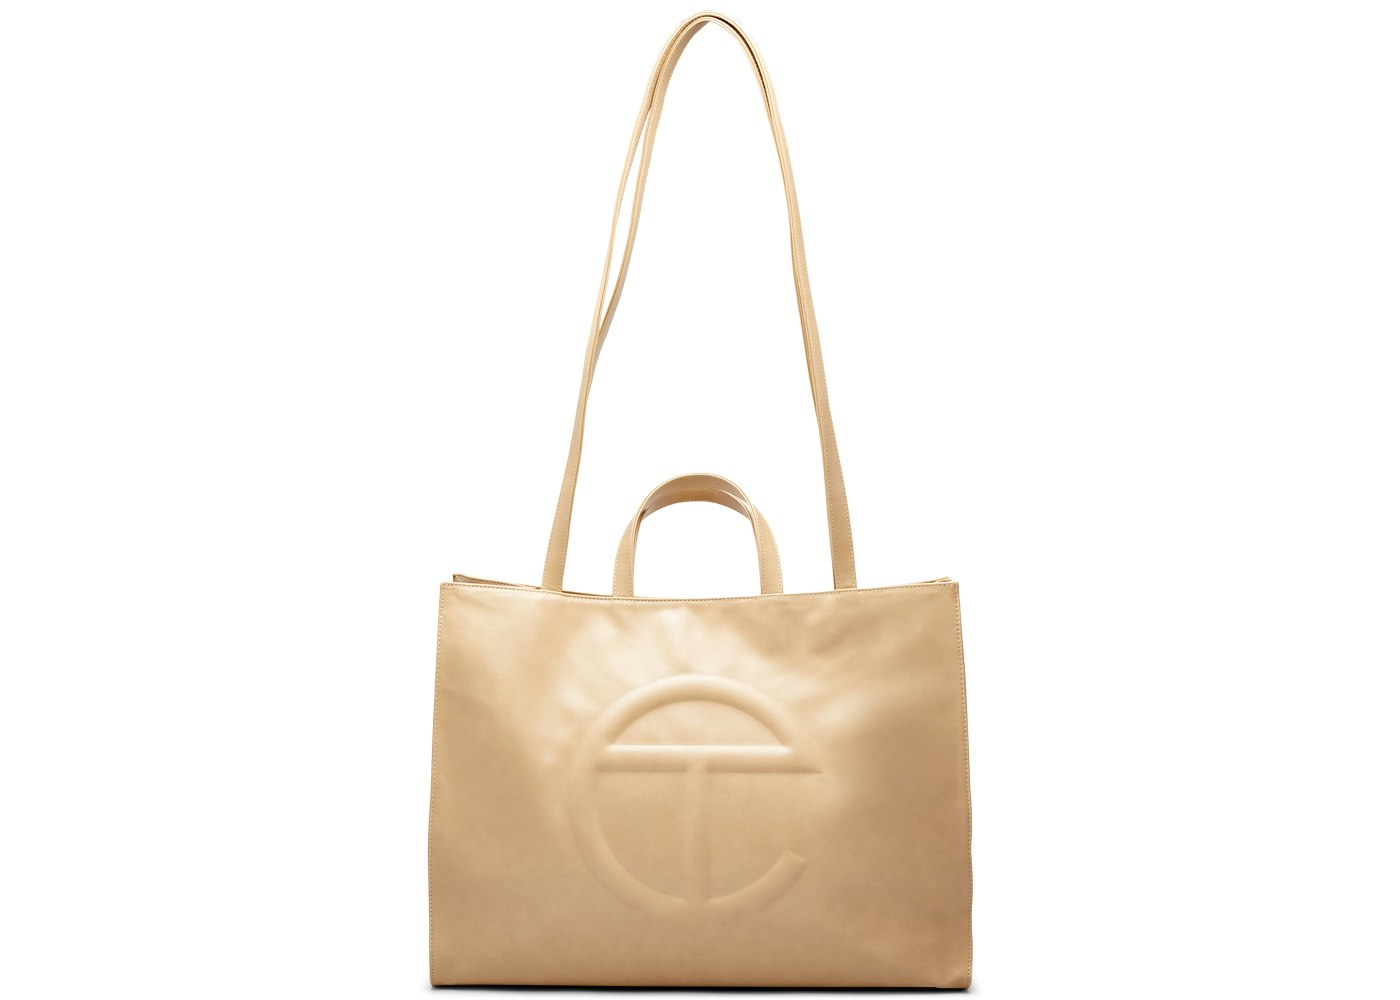 Fiorucci BAGUETTE BAG CREAM - Handbag - cream/beige - Zalando.de